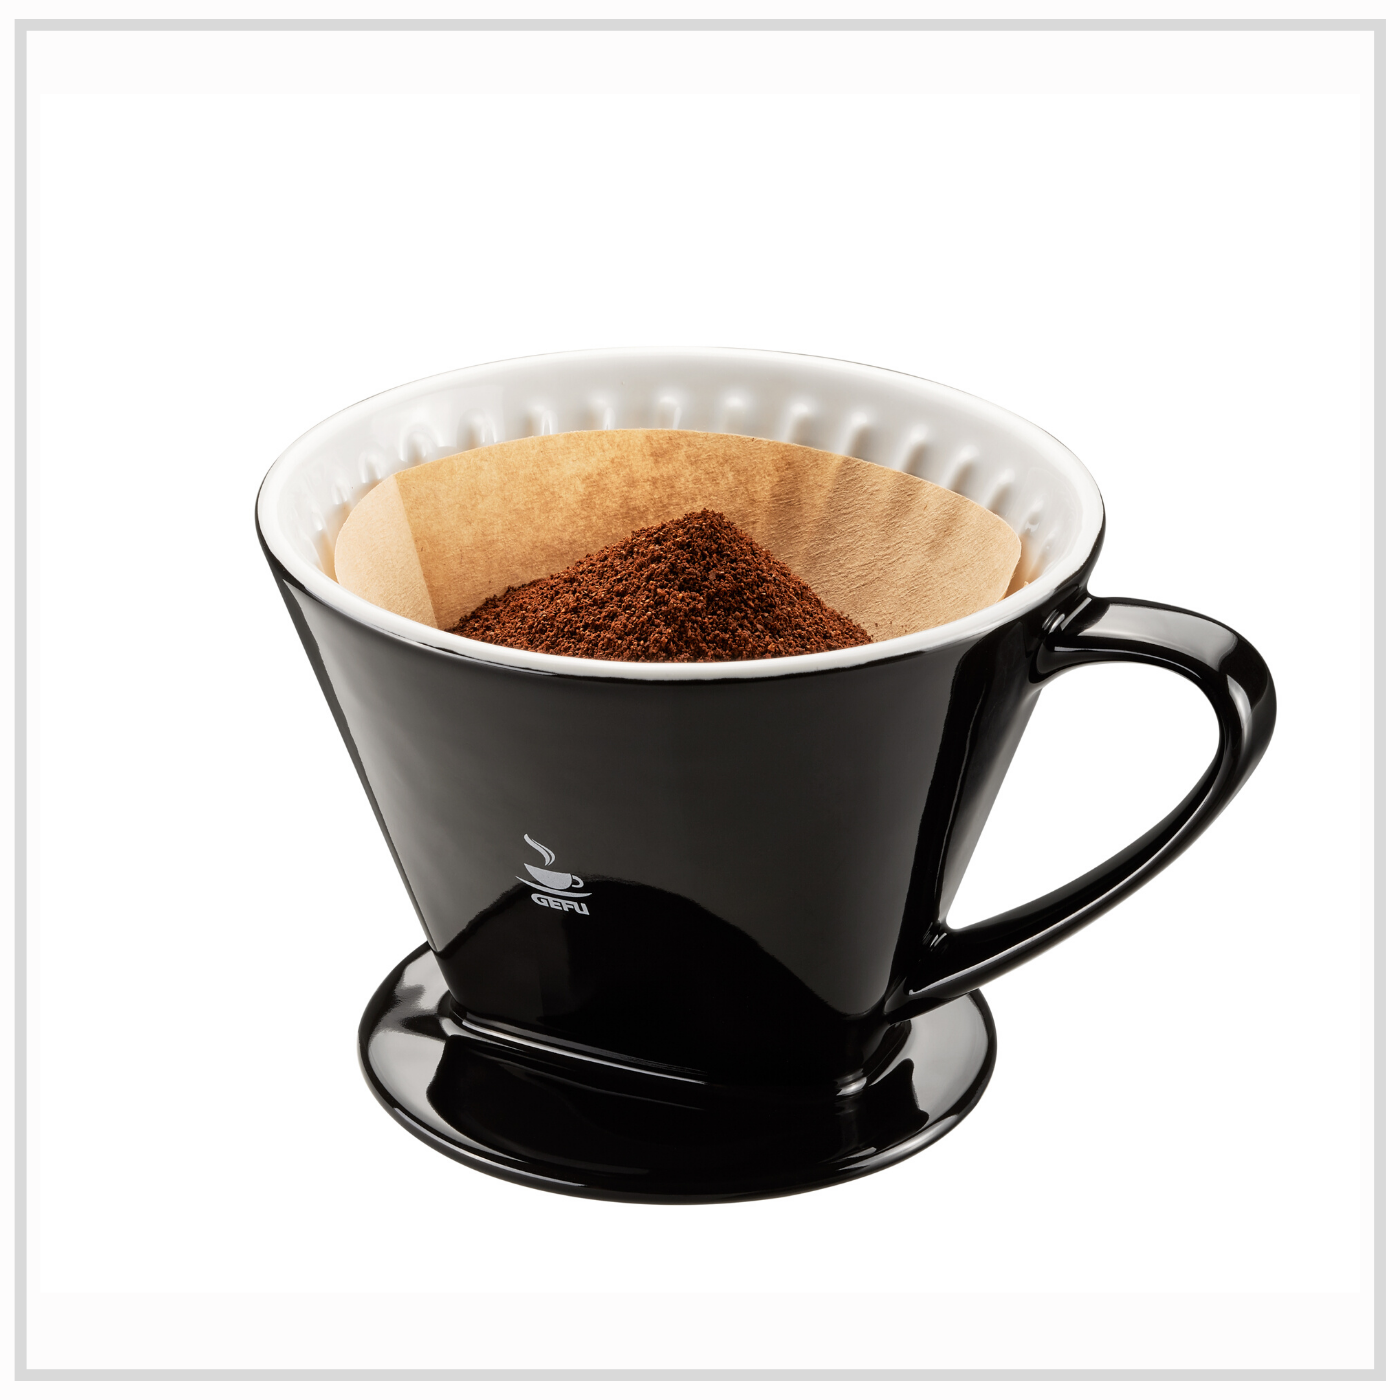 Gefu Filter for Drip Coffee - Porcelain - Size 4